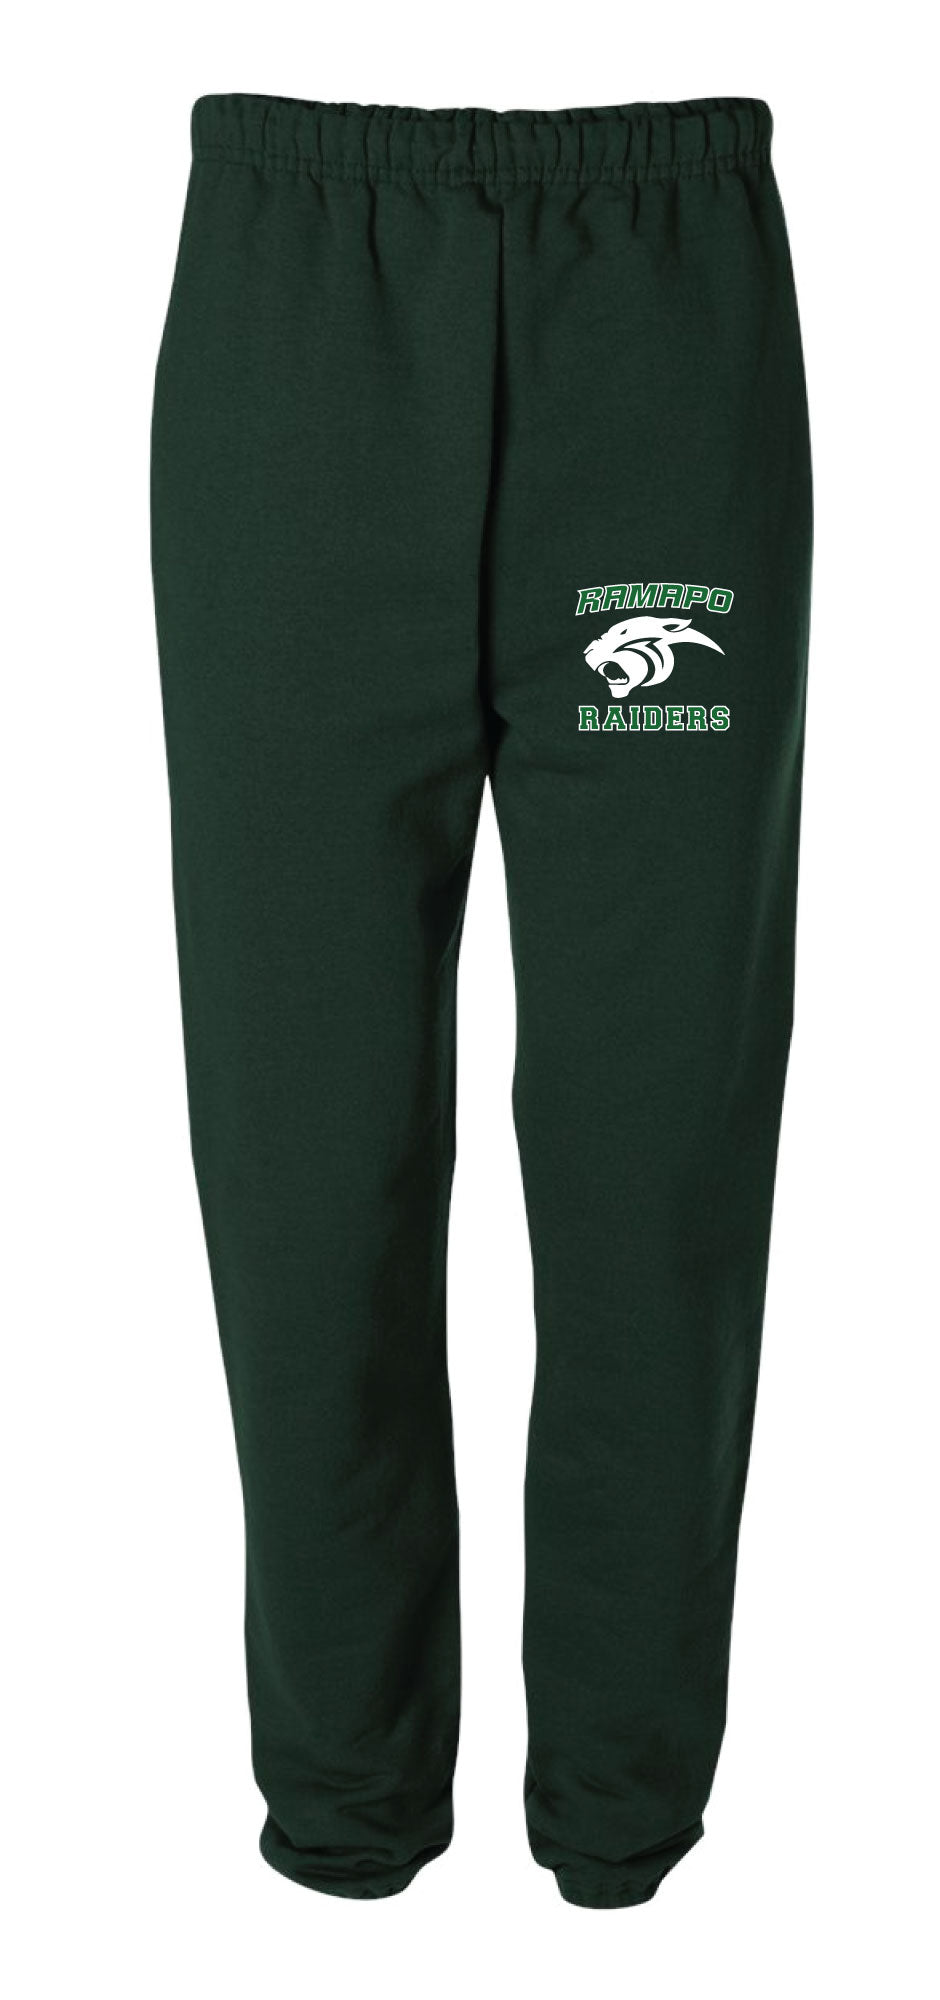 Ramapo Raiders Cotton Sweatpants - Green - 5KounT2018